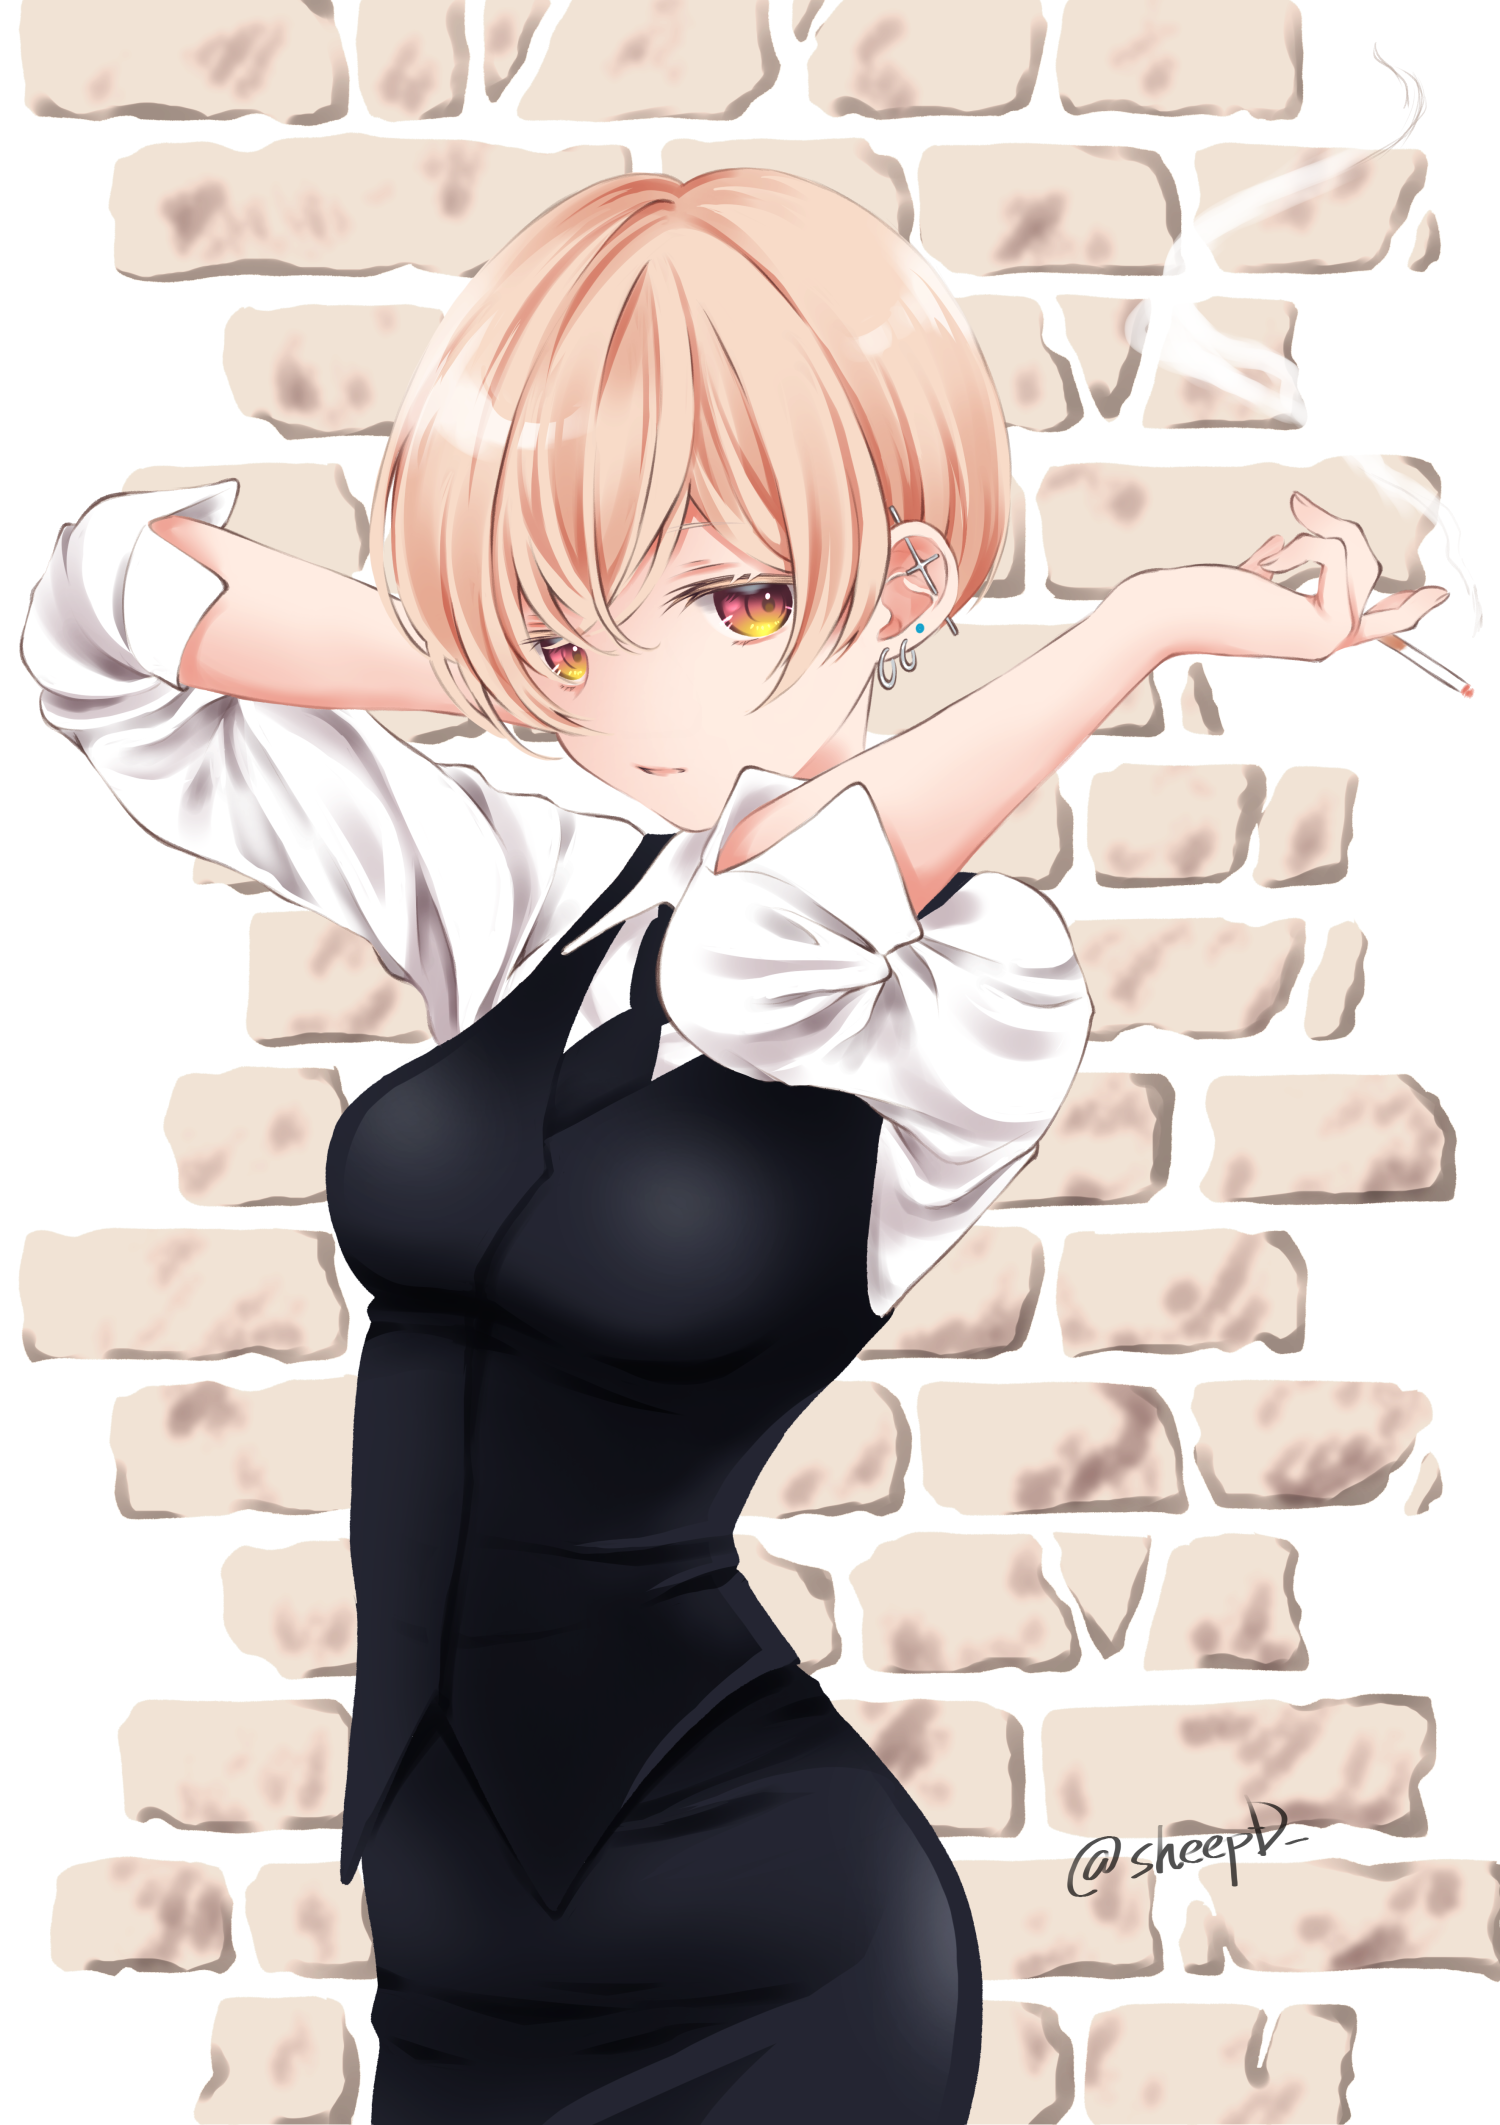 Anime Anime Girls Digital Art Artwork 2D Portrait Display Vertical Sheepd Waitress Smoking Short Hai 1500x2125